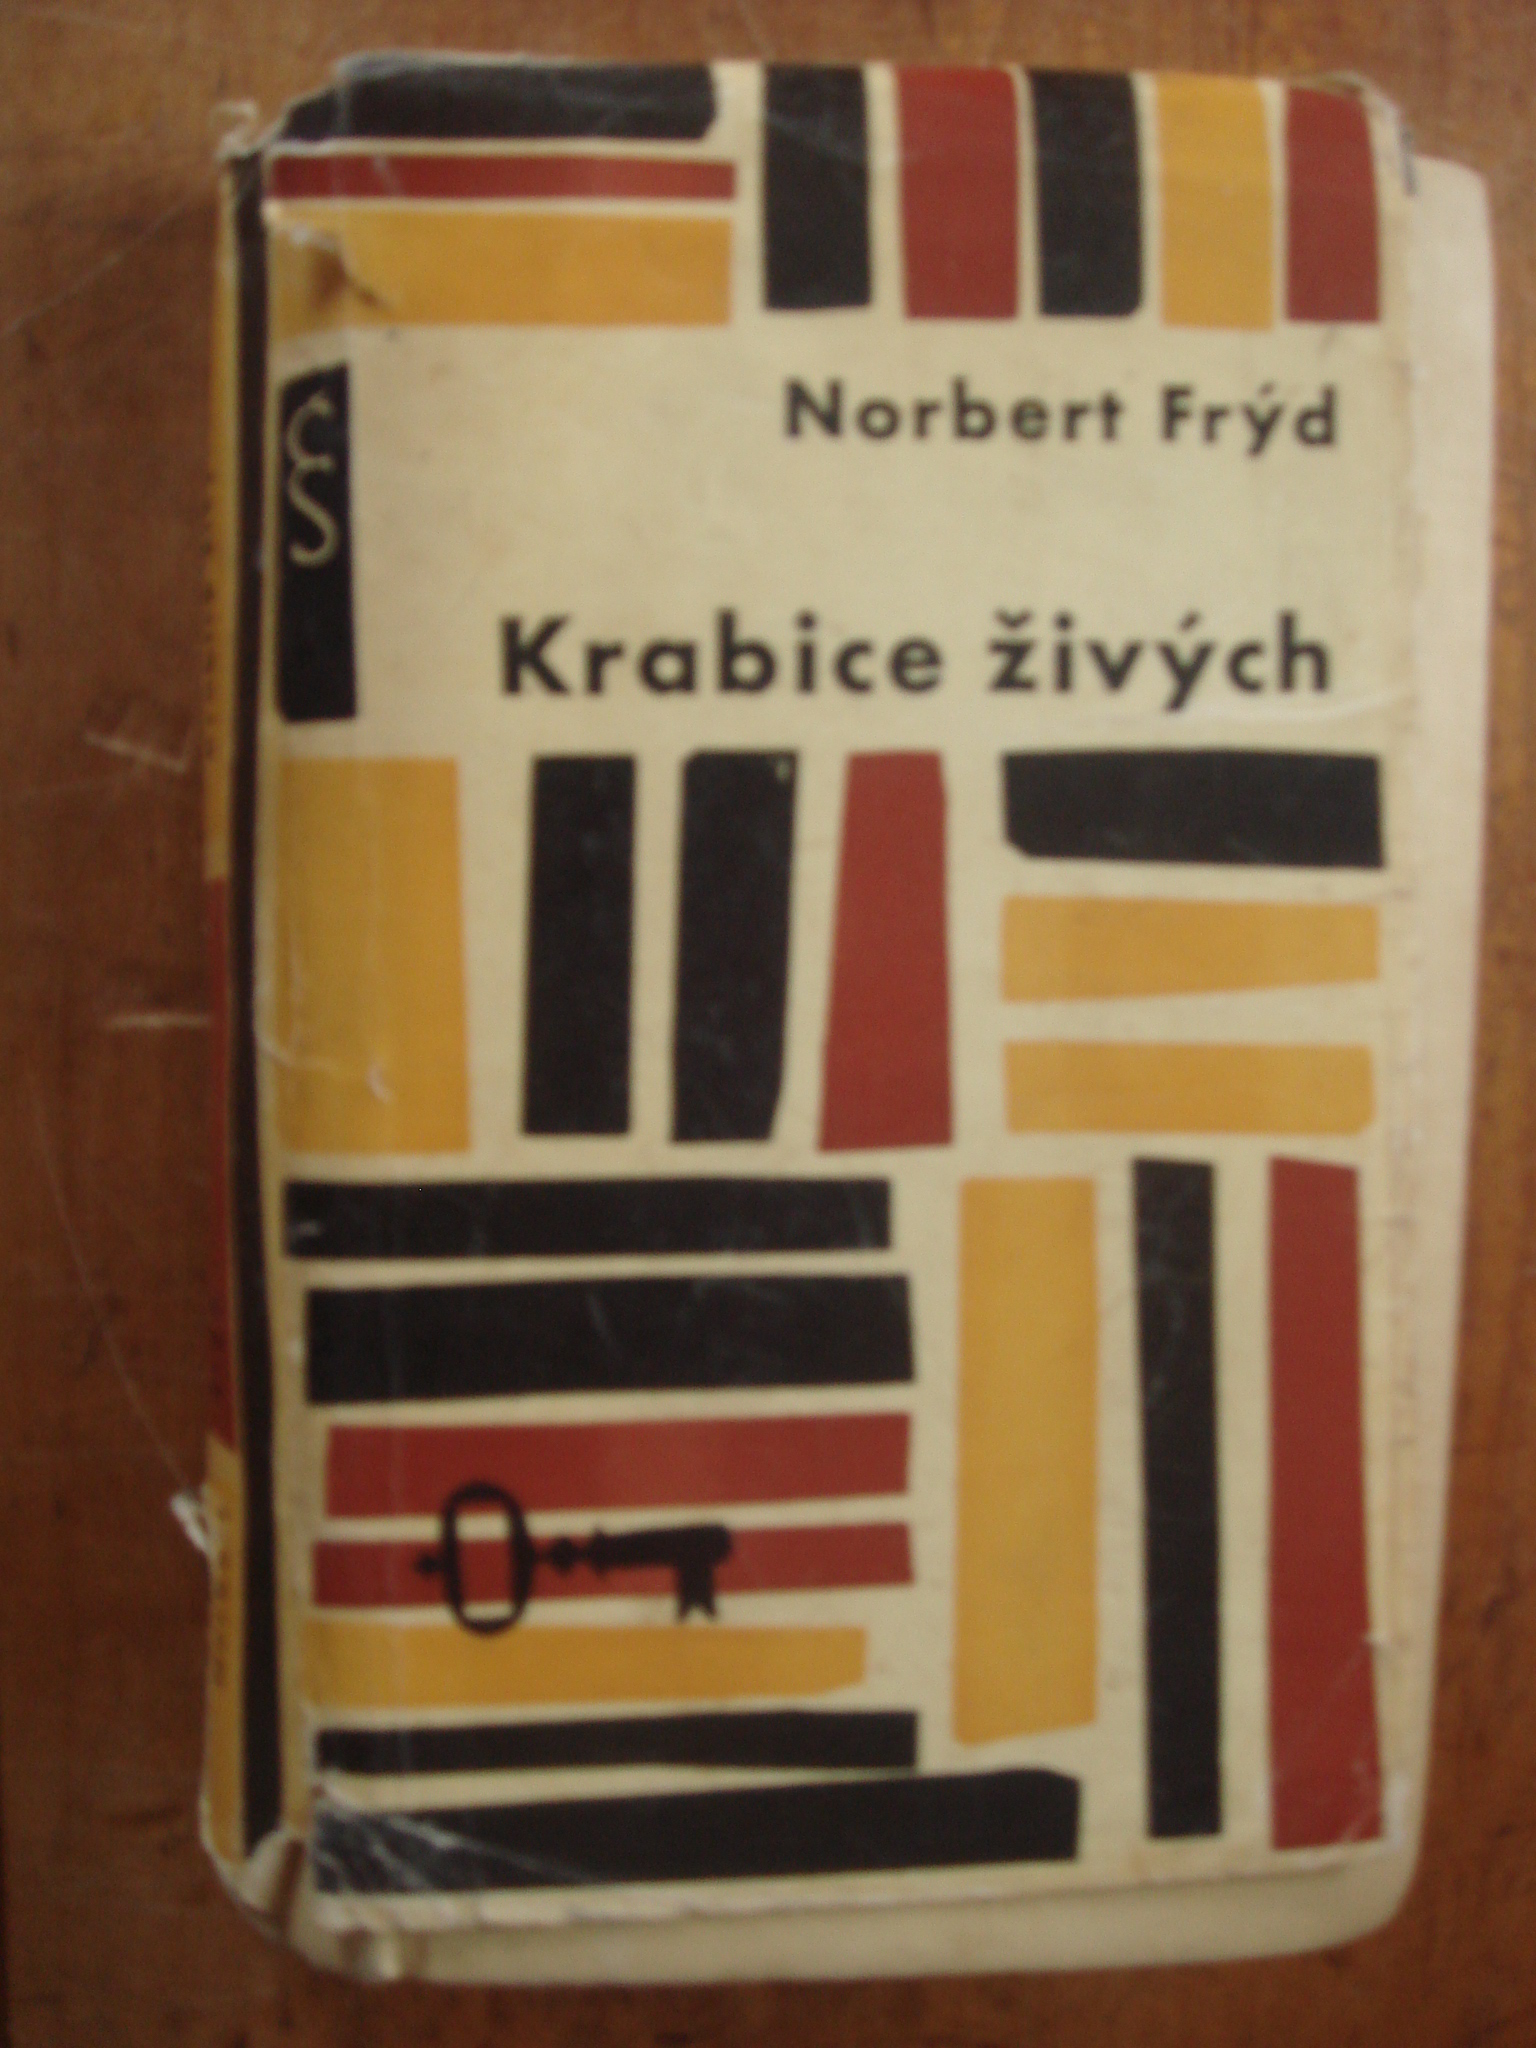 zobrazit detail knihy Frd, N: Krabice ivch 1959